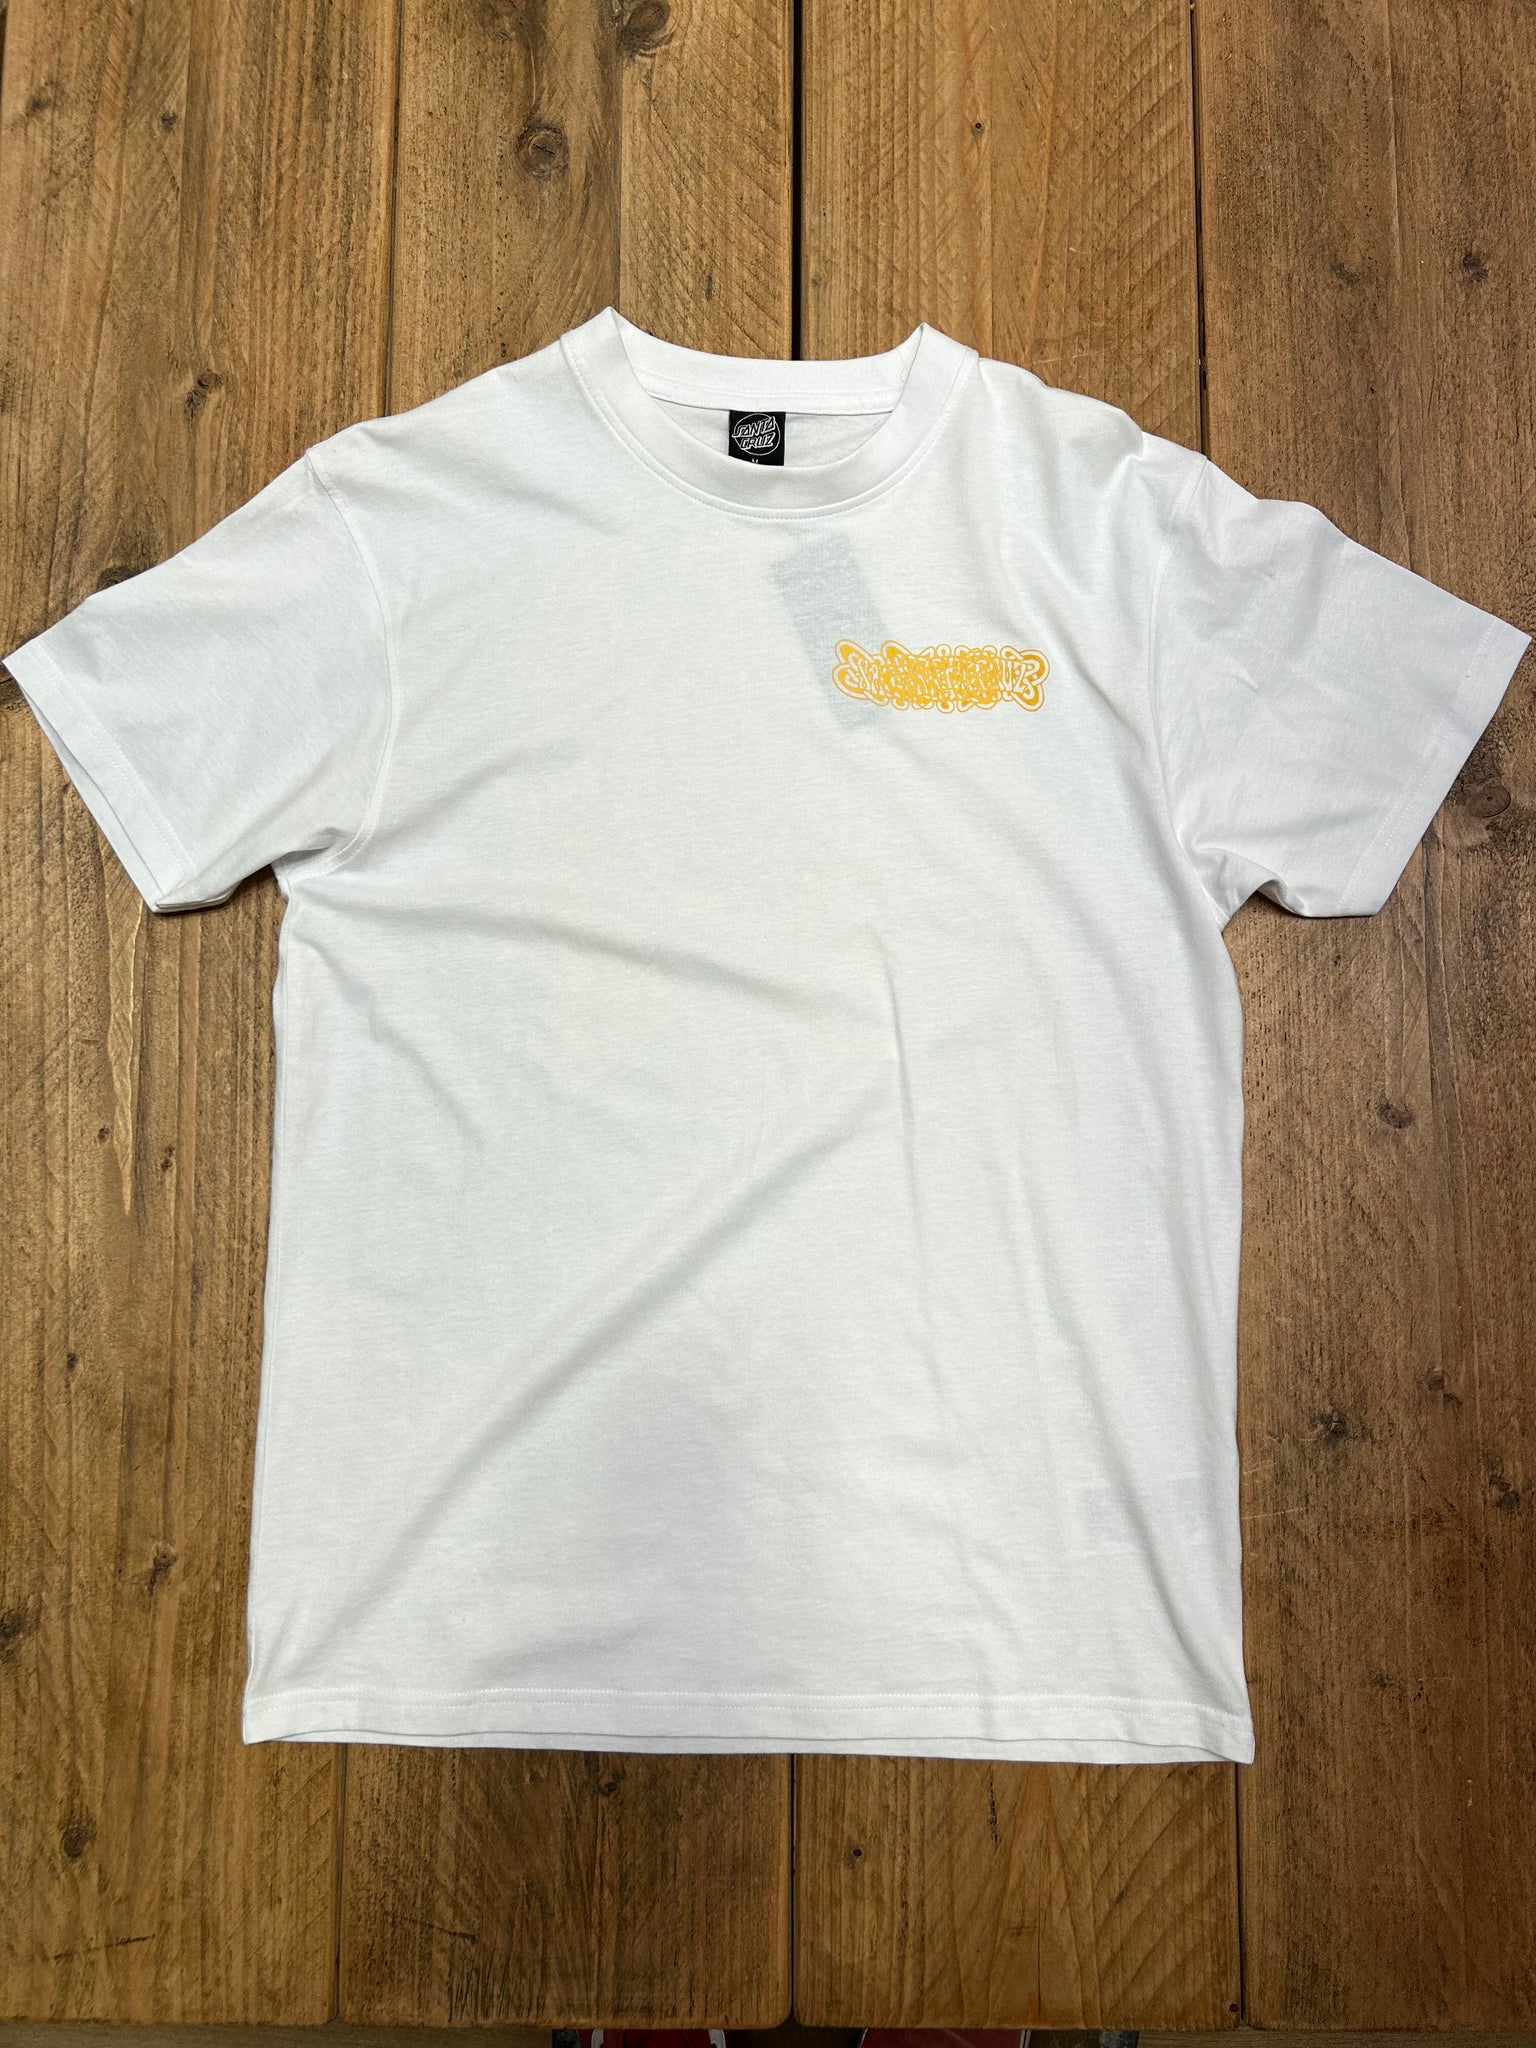 Santa Cruz Dressen Rose Club Mono T-shirt White Size M Sample 50% Off SCA-TEE-8582